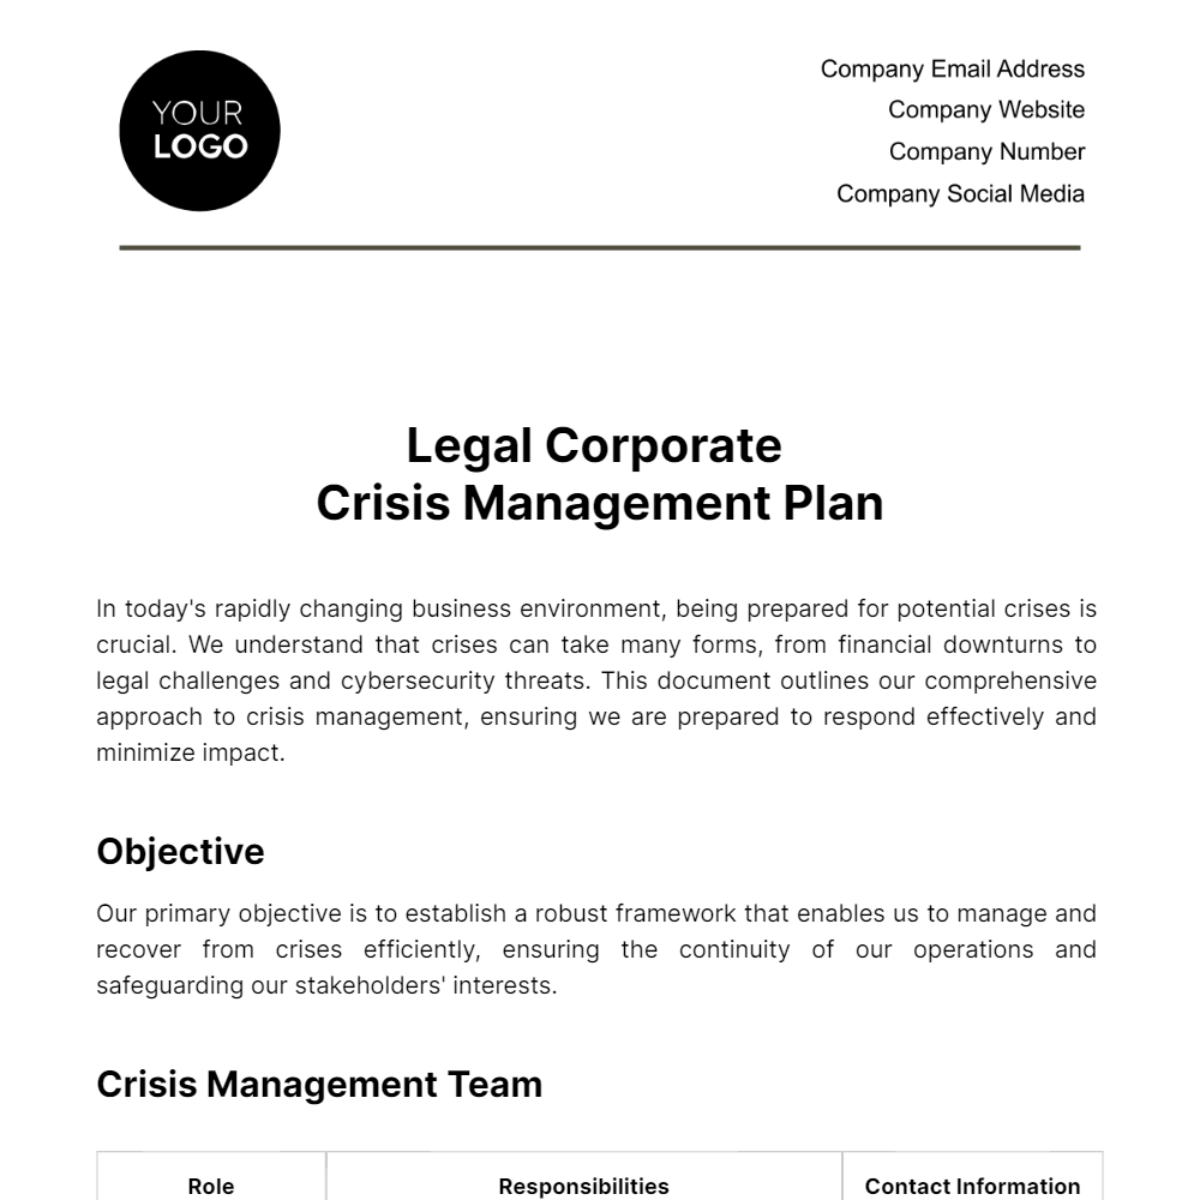 Free Legal Corporate Crisis Management Plan Template